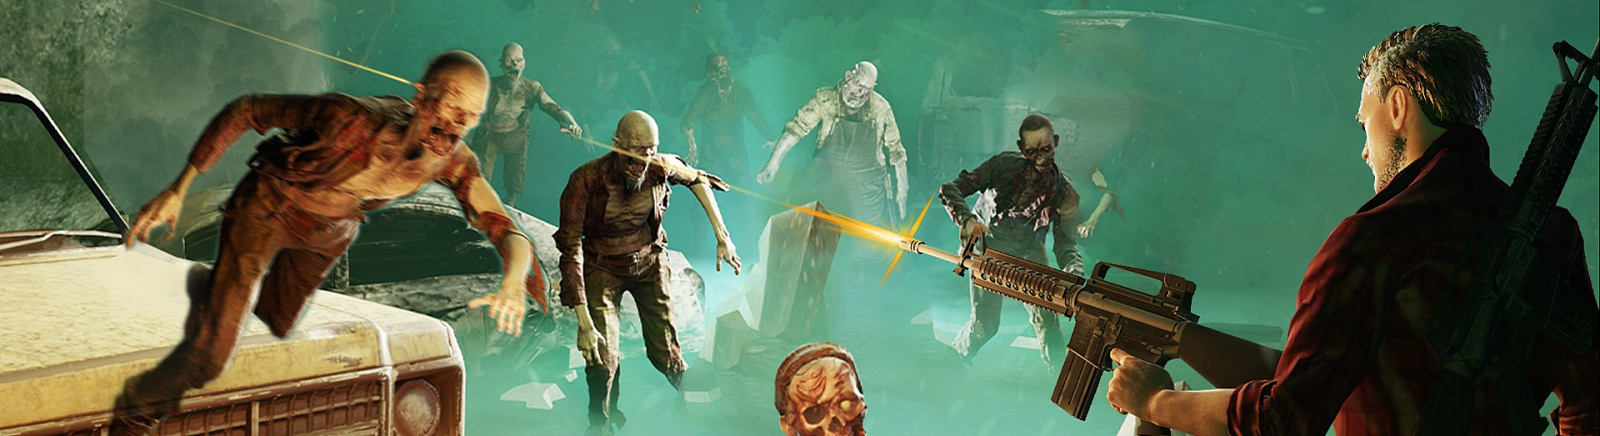 Дата выхода Dawn of the Undead  на PC и Xbox One в России и во всем мире